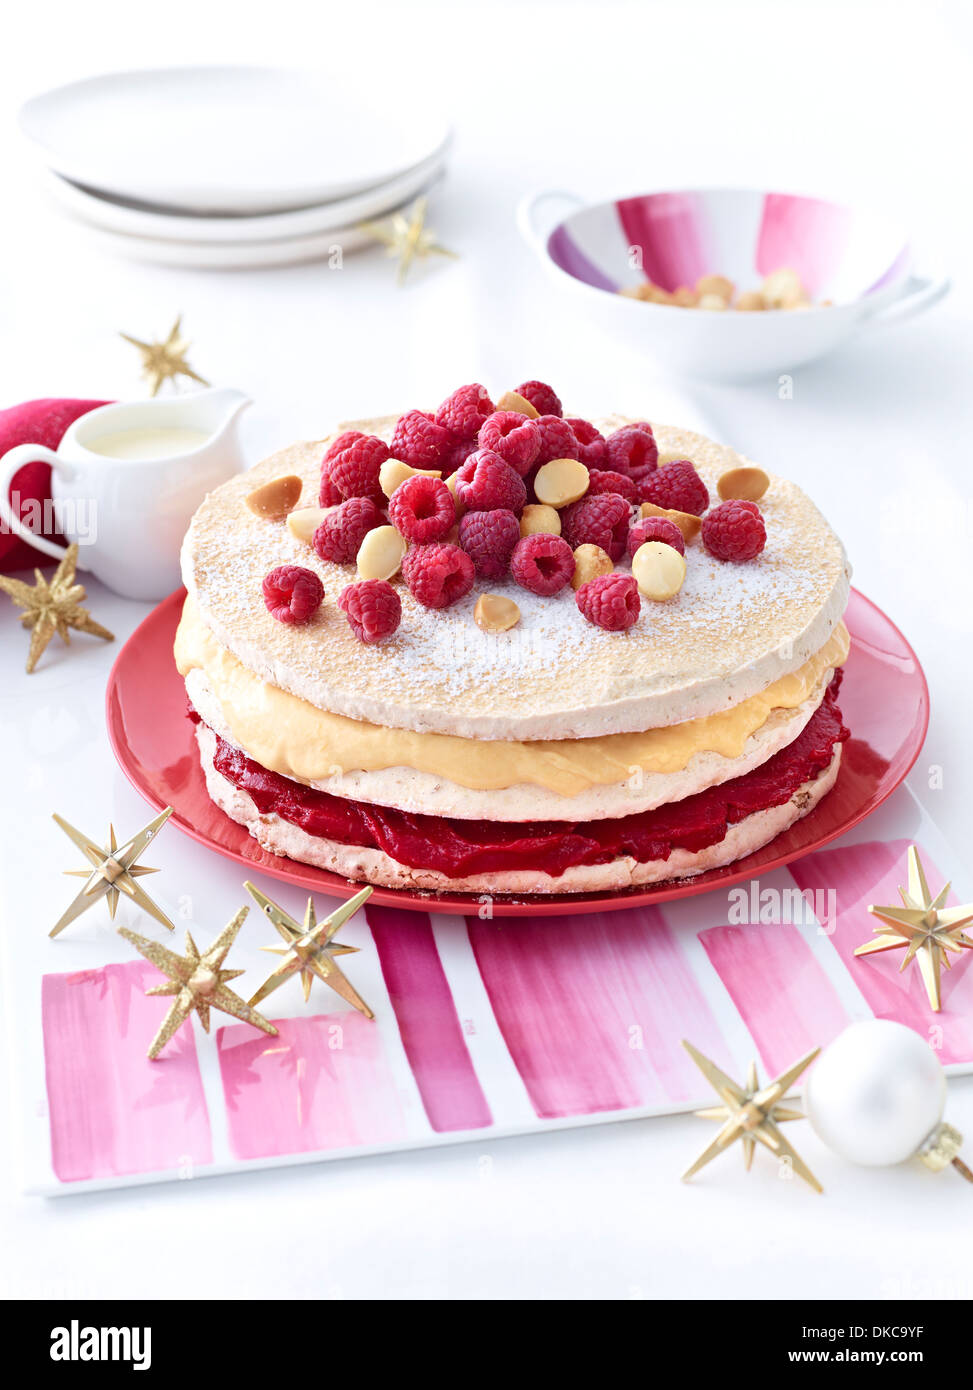 Meringue layer cake with raspberries and macadamia nuts Stock Photo